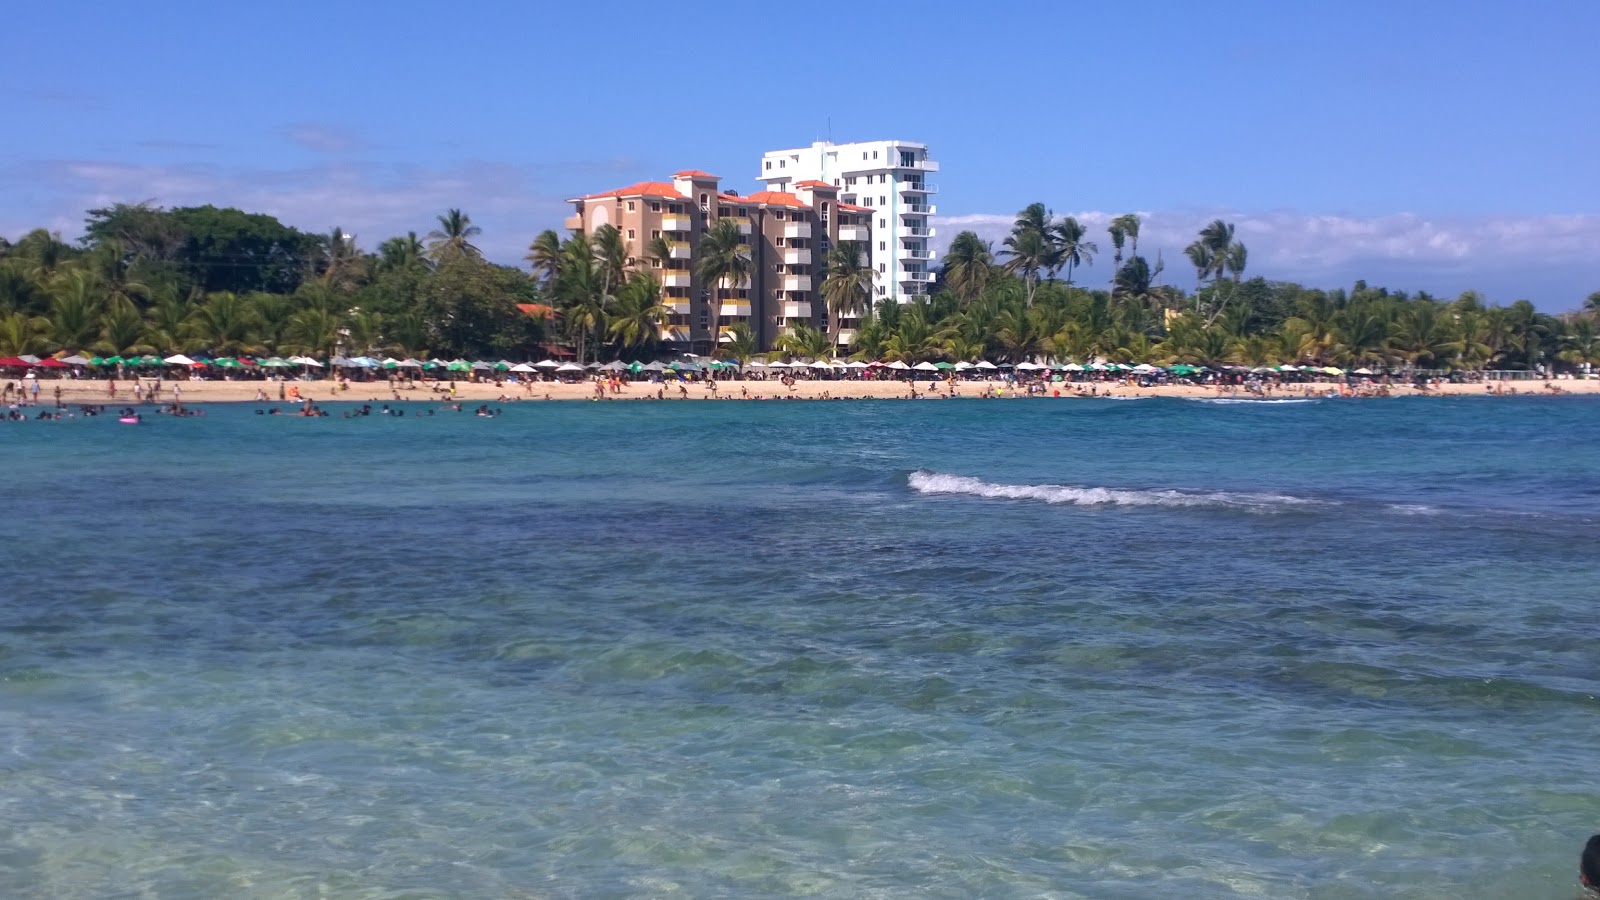 Photo of Juan Dolio beach and its beautiful scenery